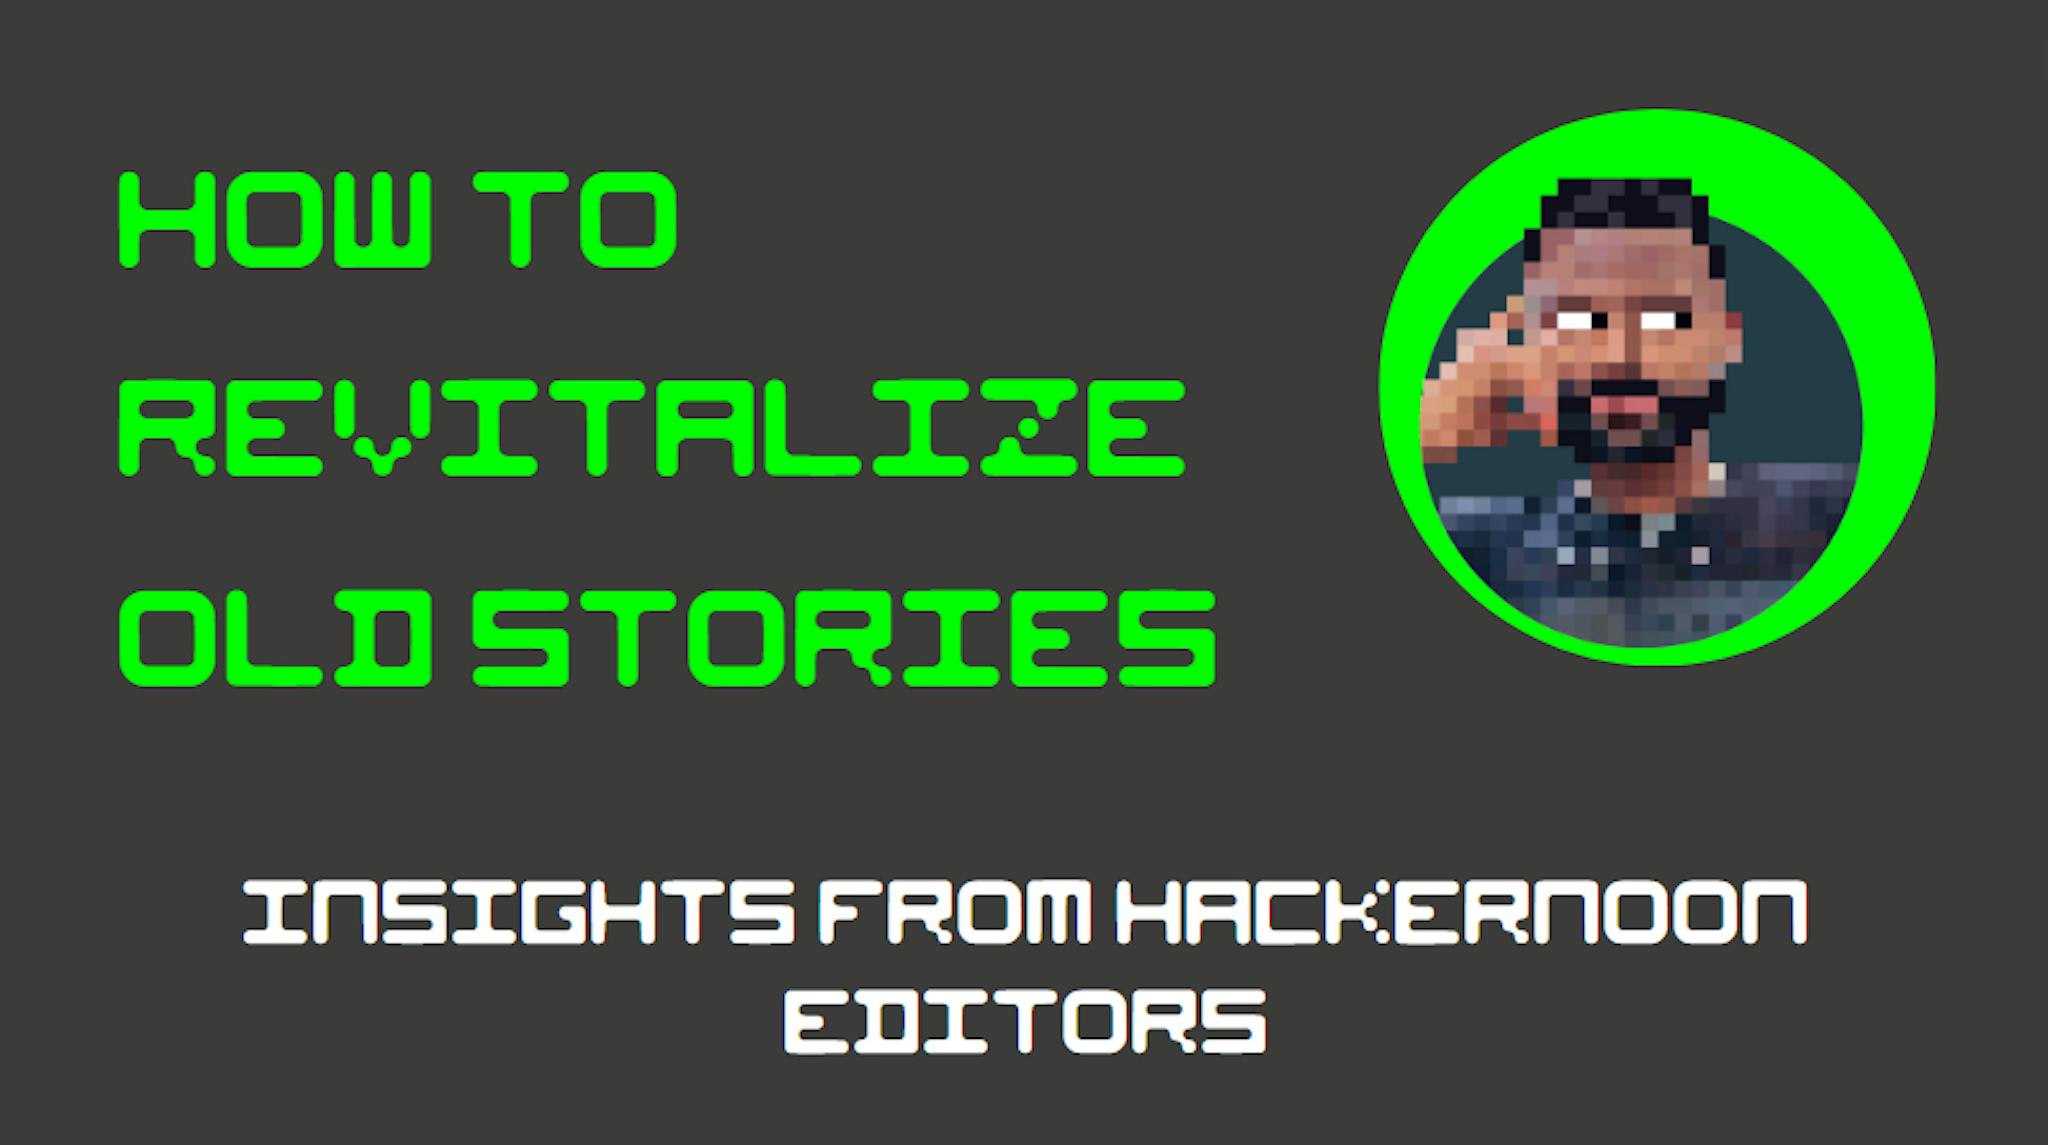 featured image - 古いストーリーを再び新しくする方法: HackerNoon 編集者からの洞察